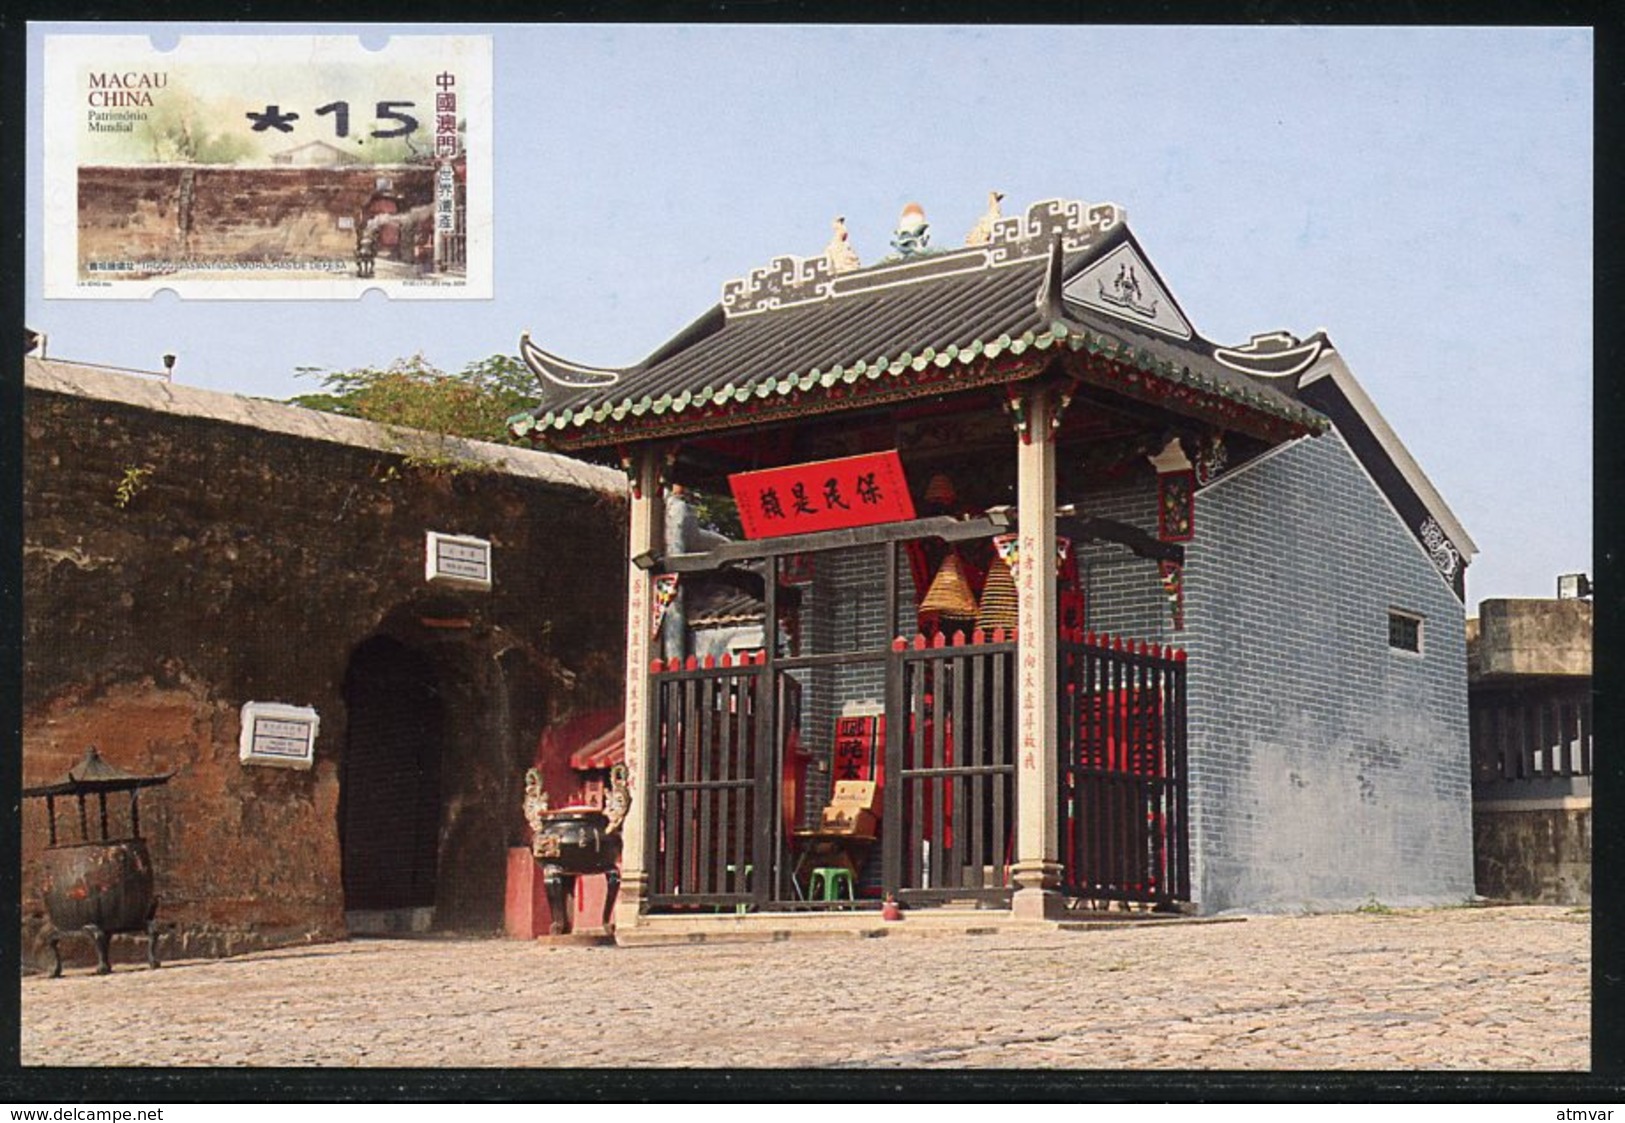 MACAU / MACAO (2008). ATM Nagler - Patrimonio Mundial, World Heritage - Old City Walls - Na Tcha Temple - Automatenmarken